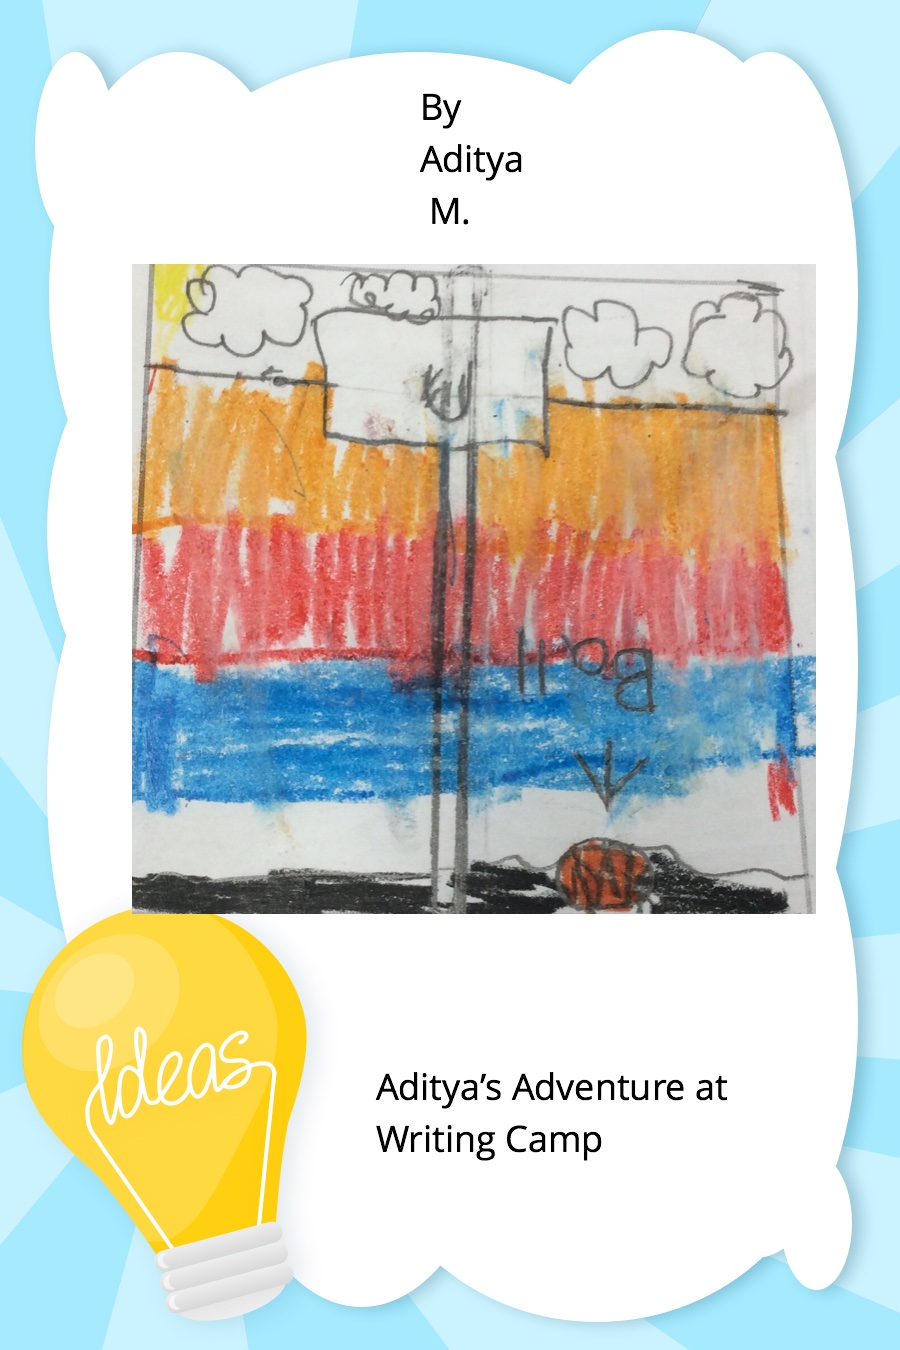 Aditya’s Adventure at Writing Camp by Aditya M